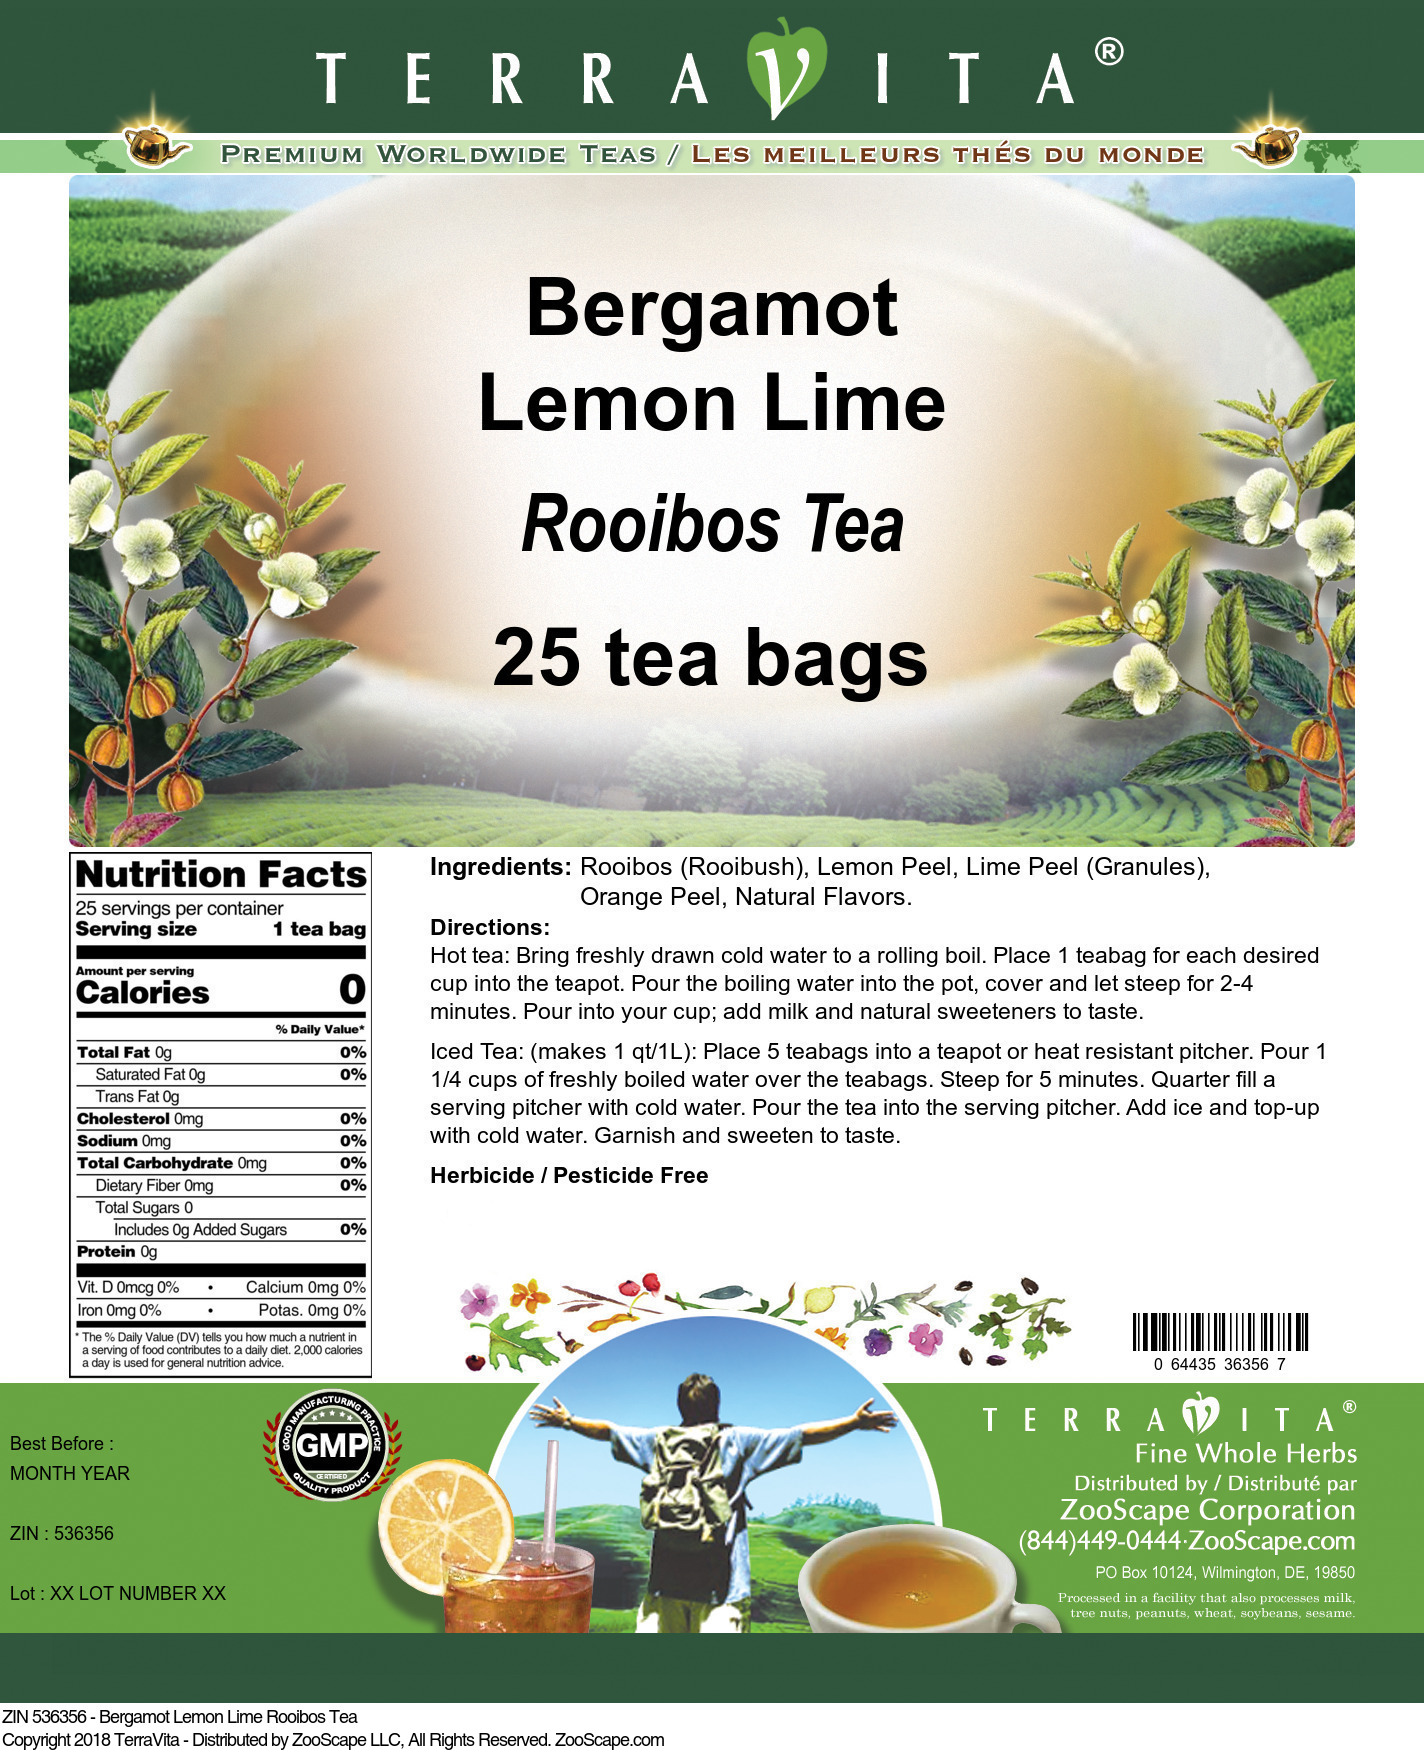 Bergamot Lemon Lime Rooibos Tea - Label